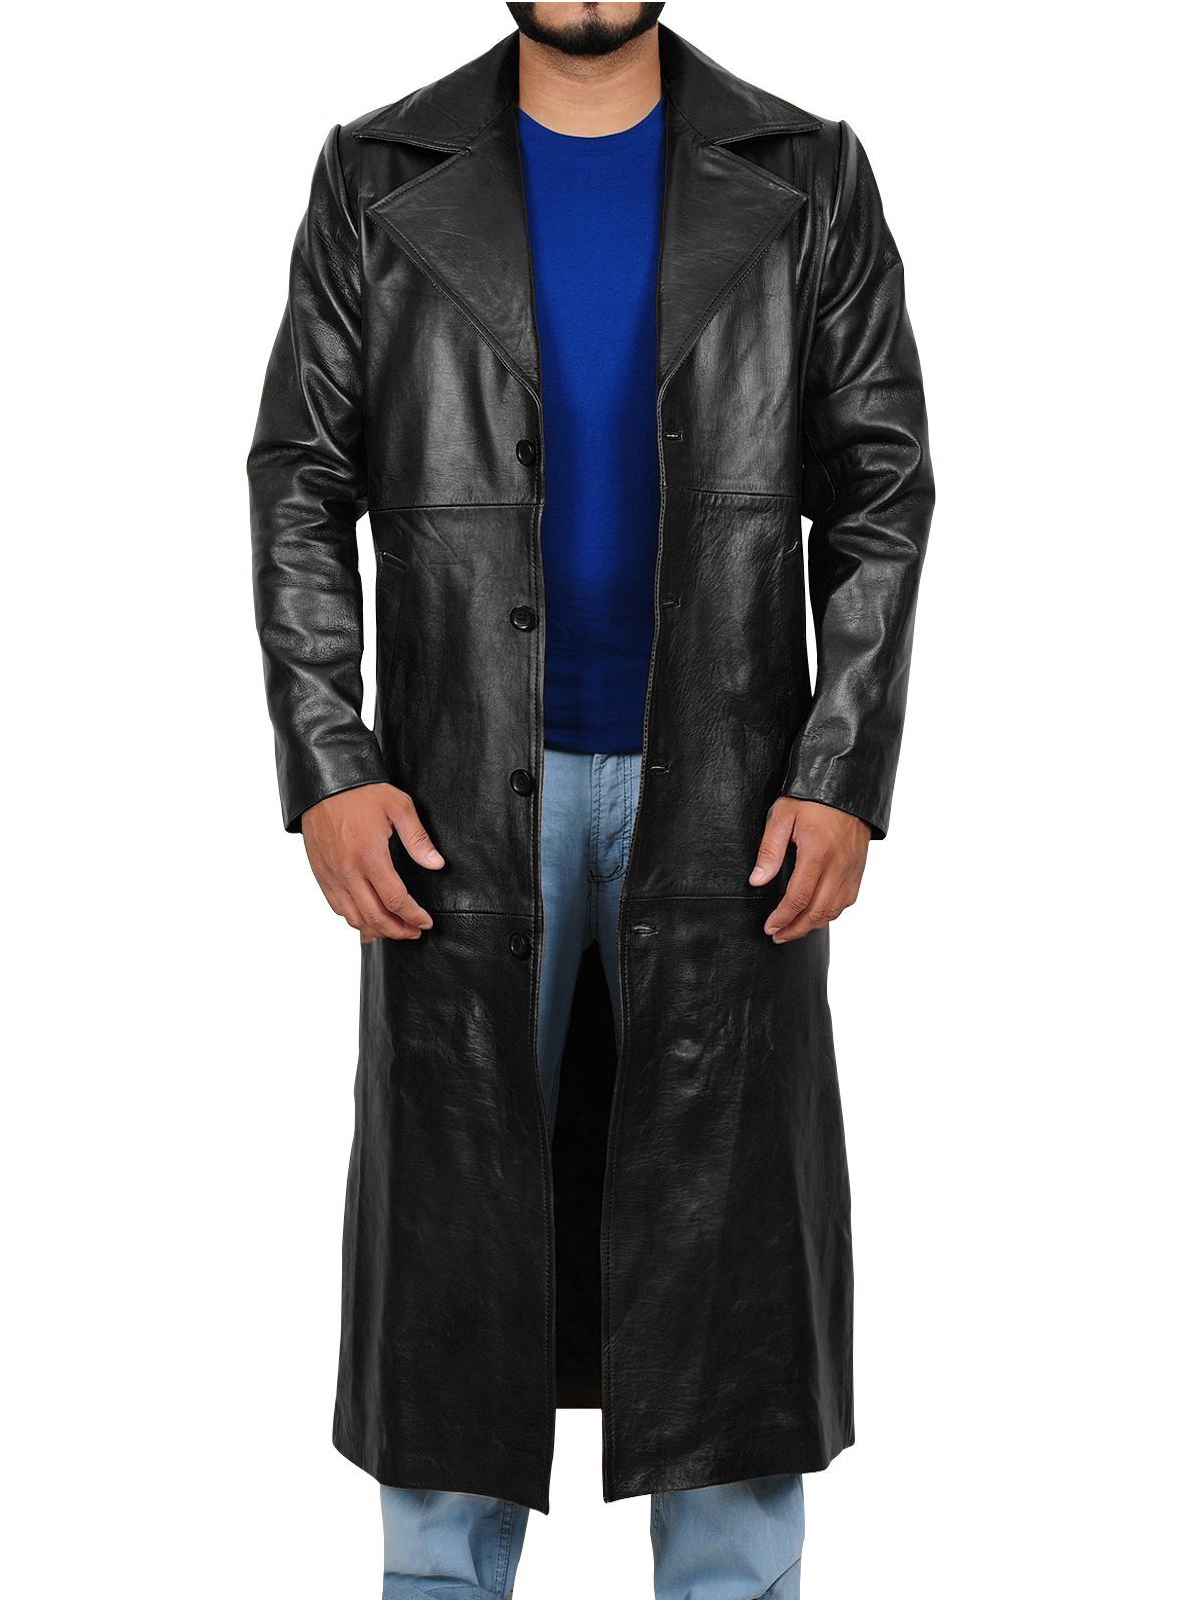 WWE The Undertaker Black Leather Coat